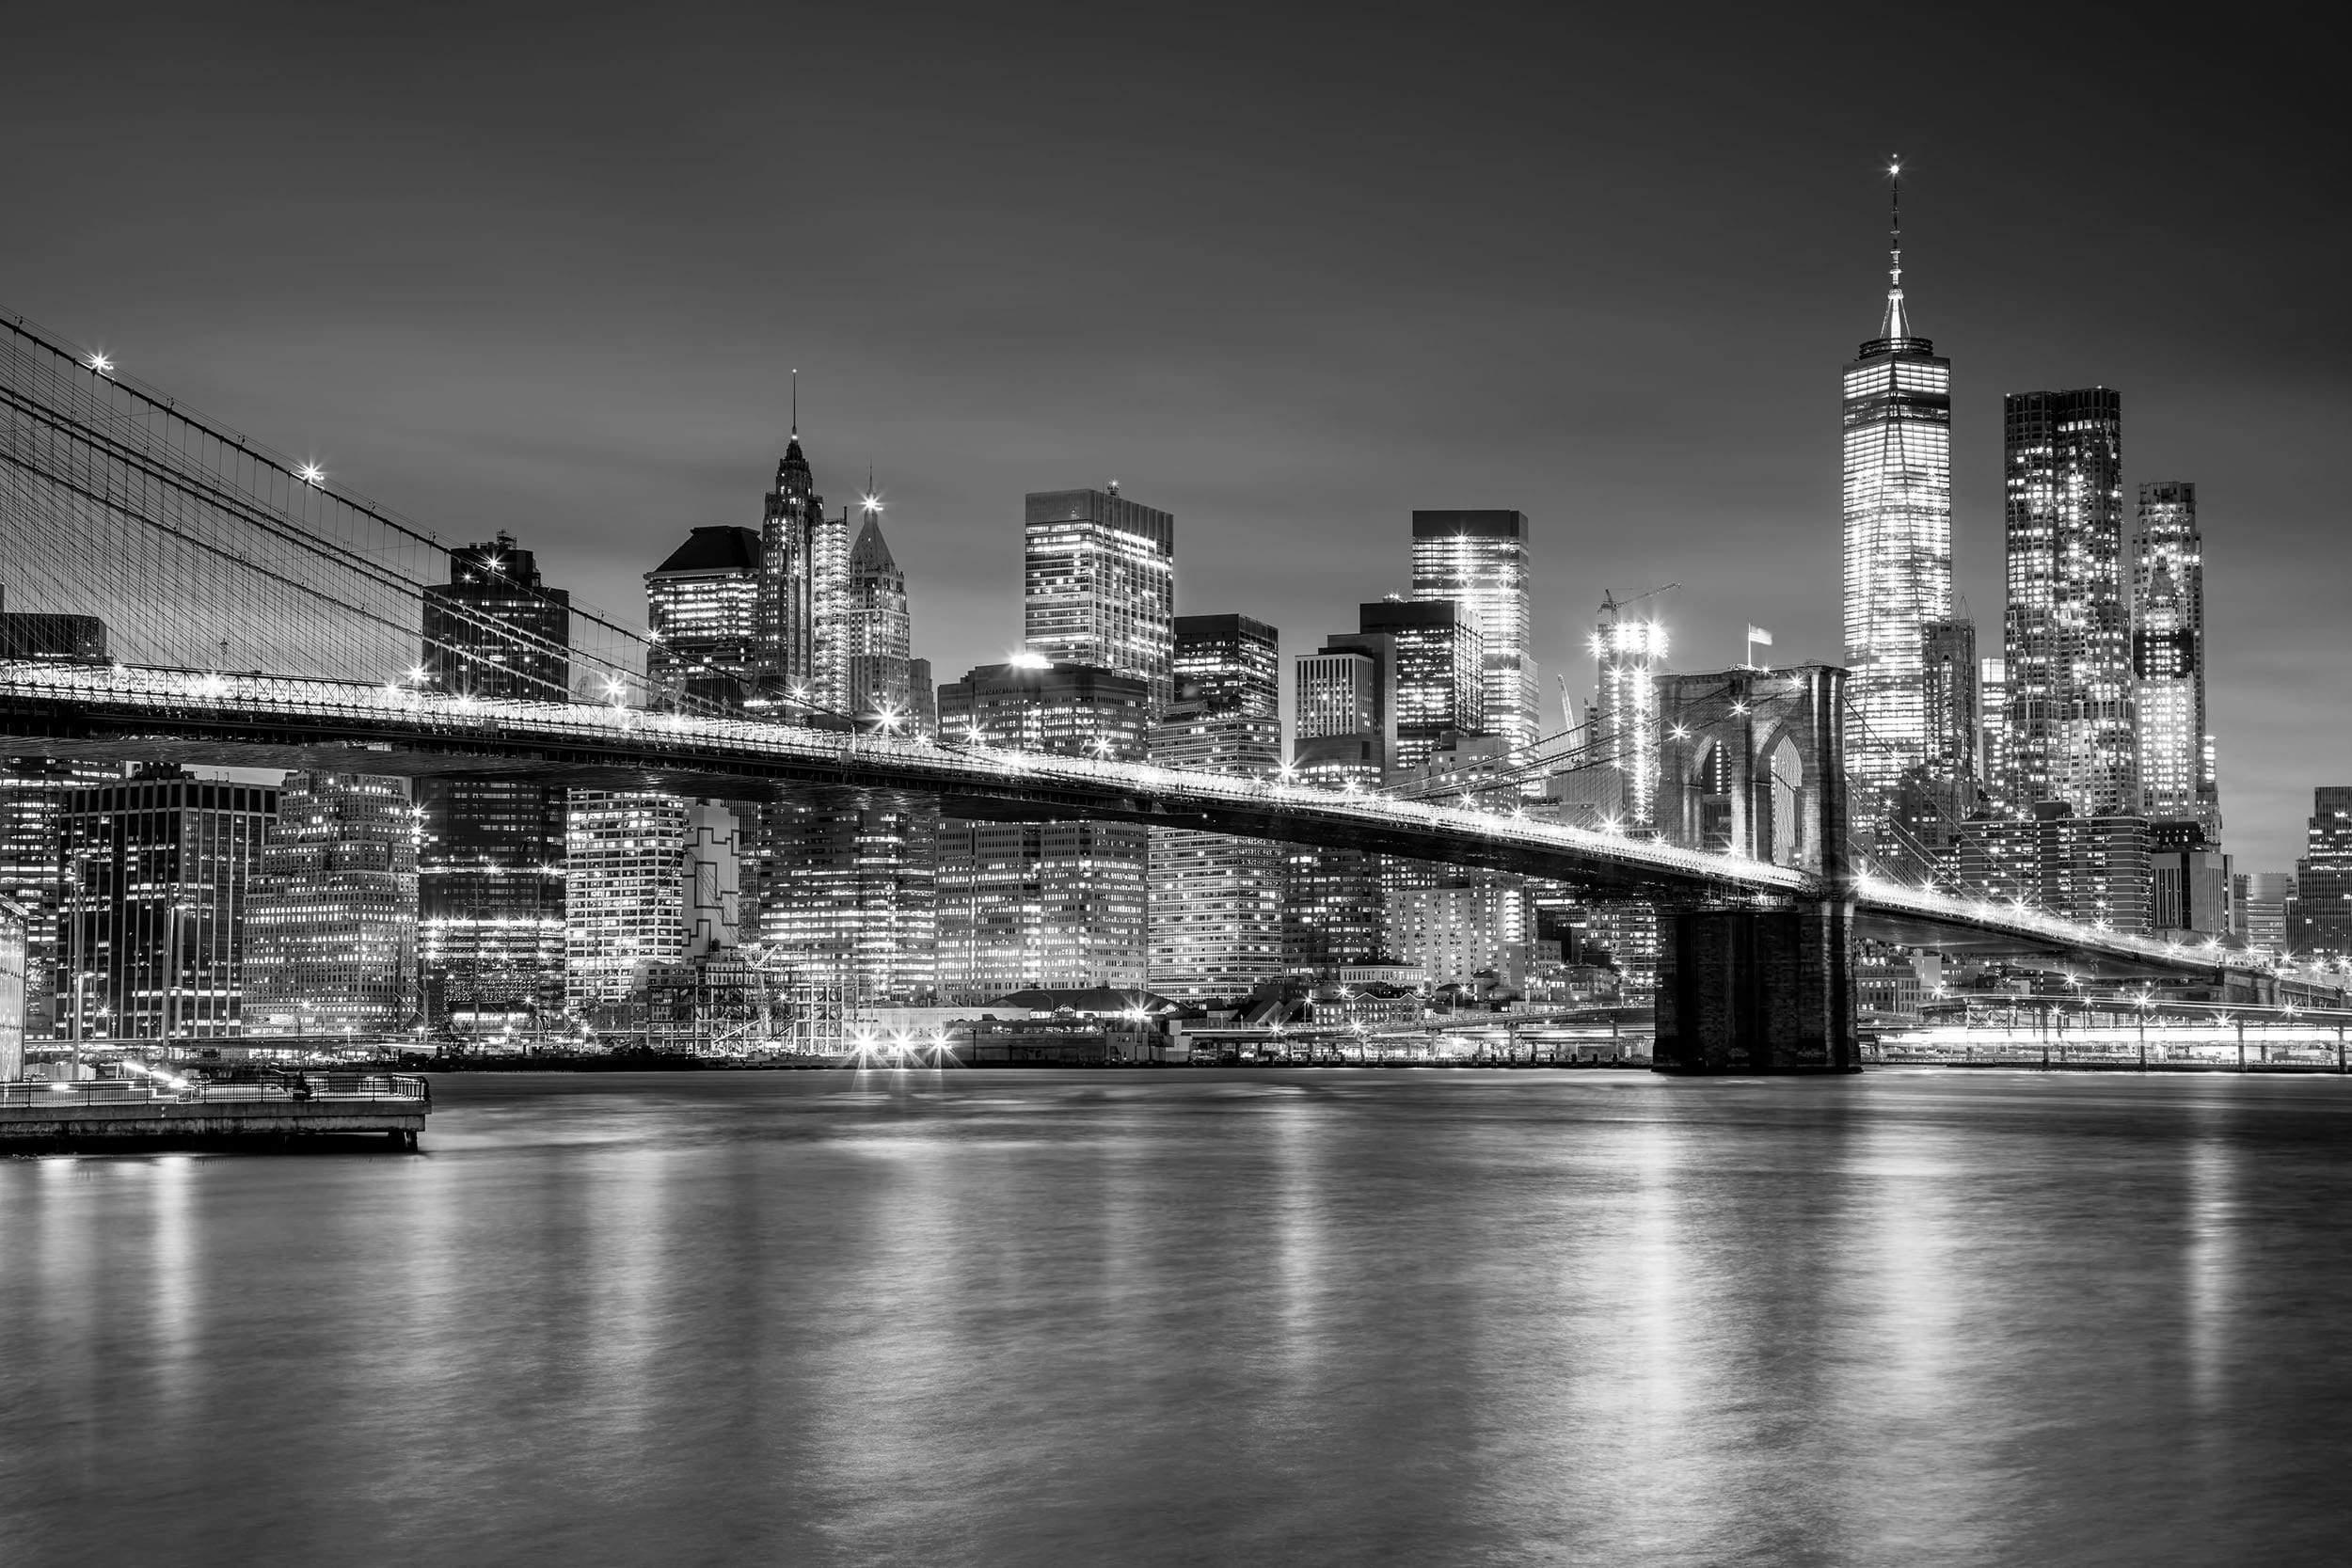 B&W Brooklyn Bridge with NYC in Background